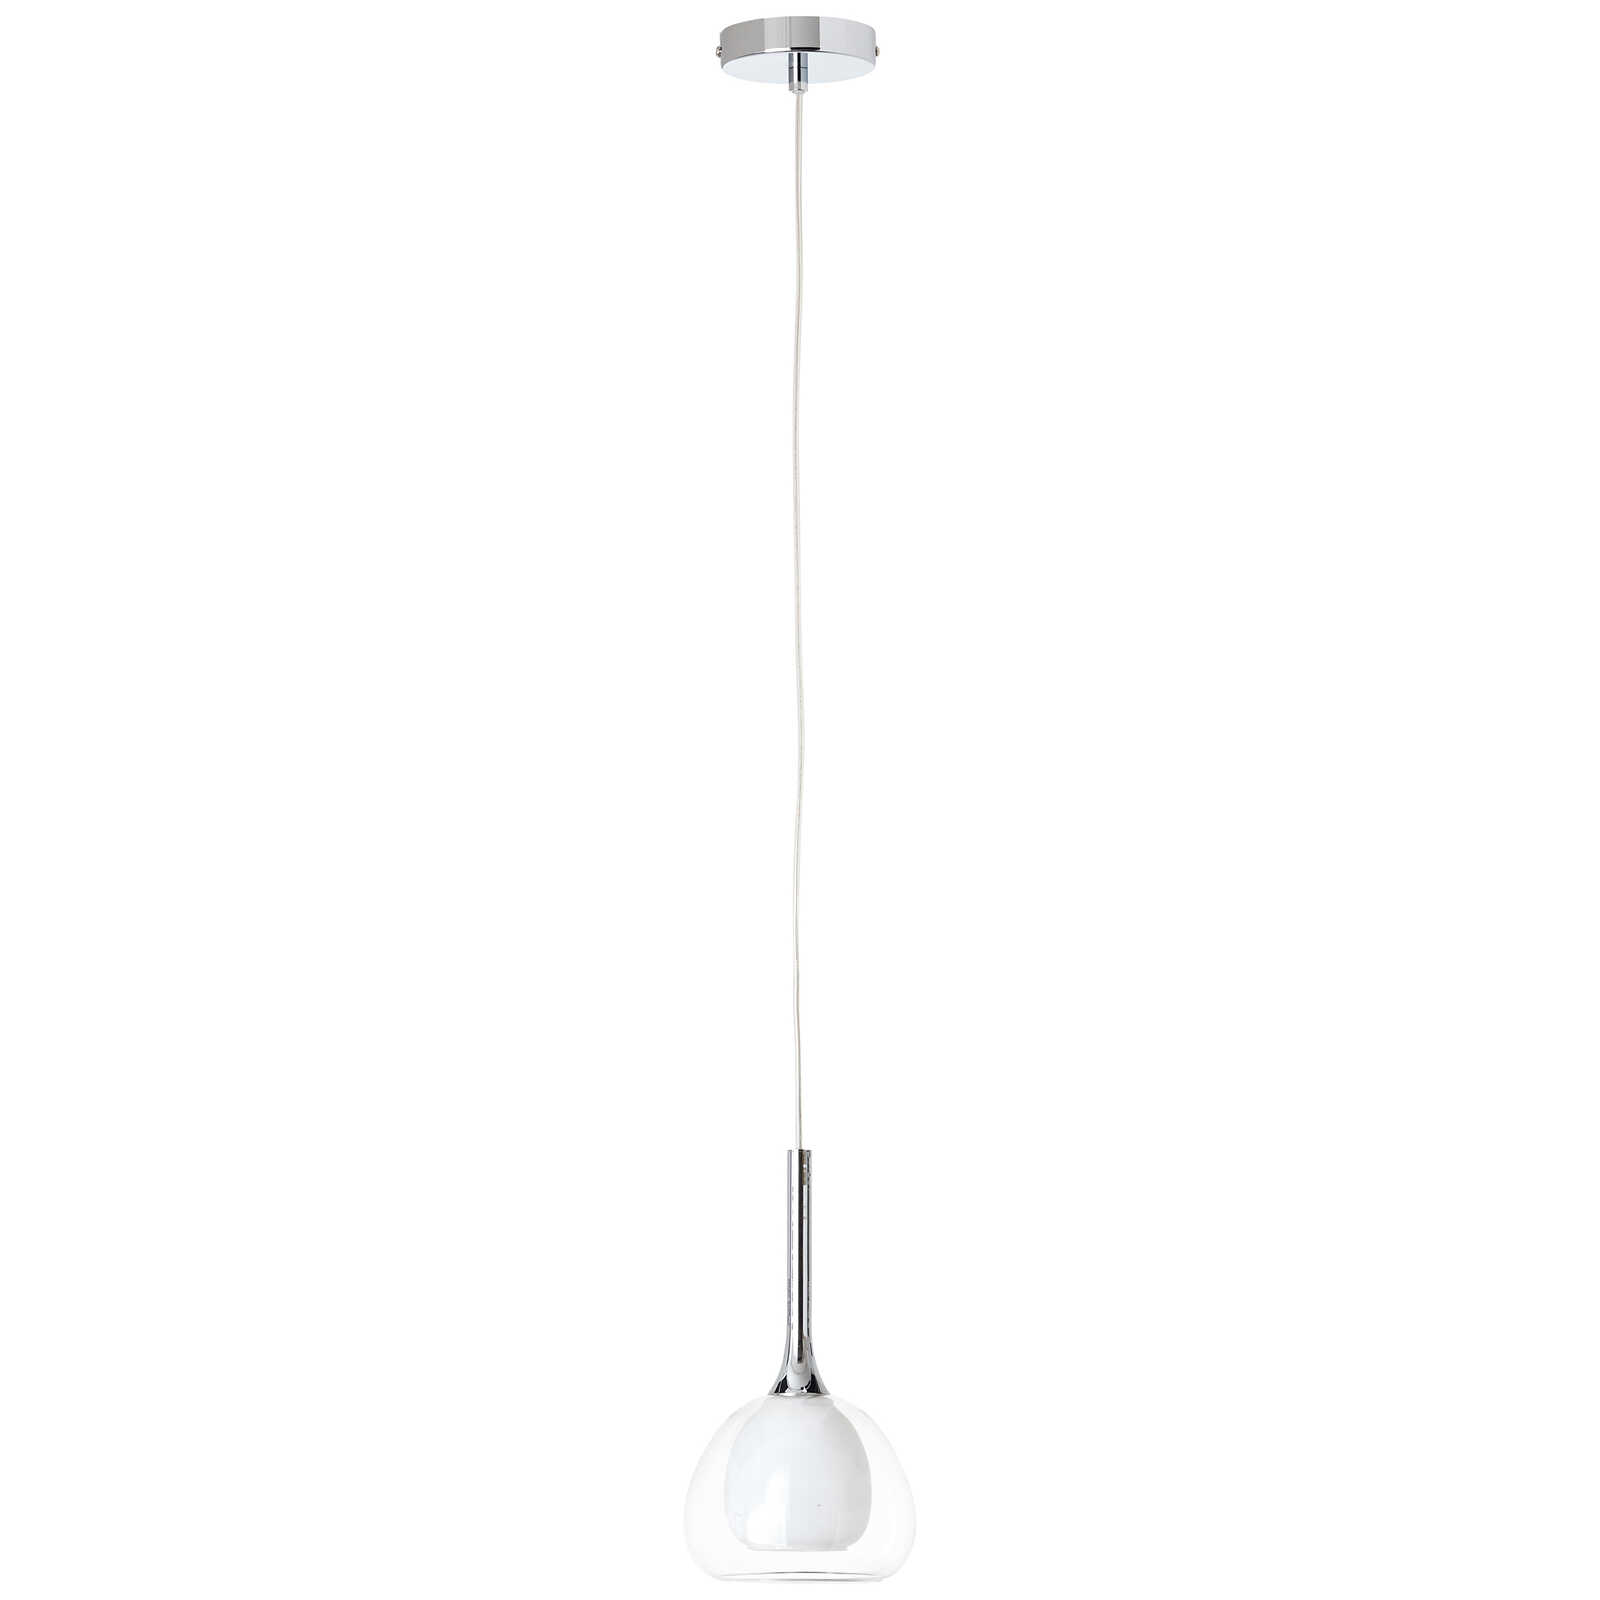             Glazen hanglamp - Iris 1 - Metallic
        